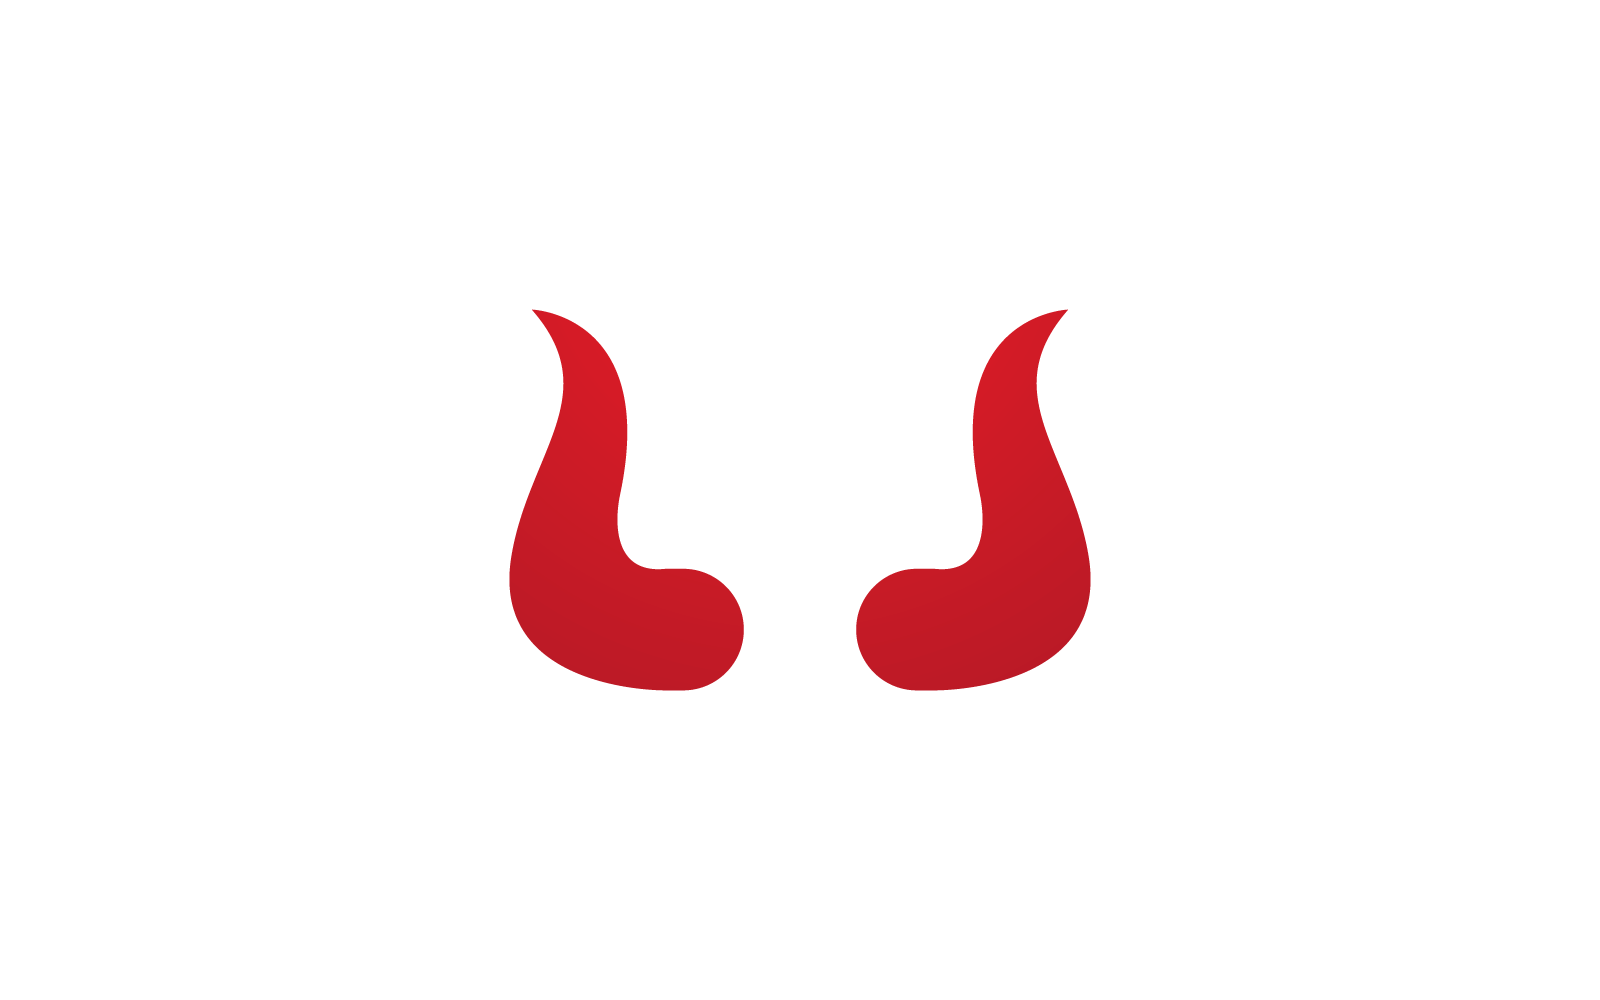 Horn logo illustration vector design template